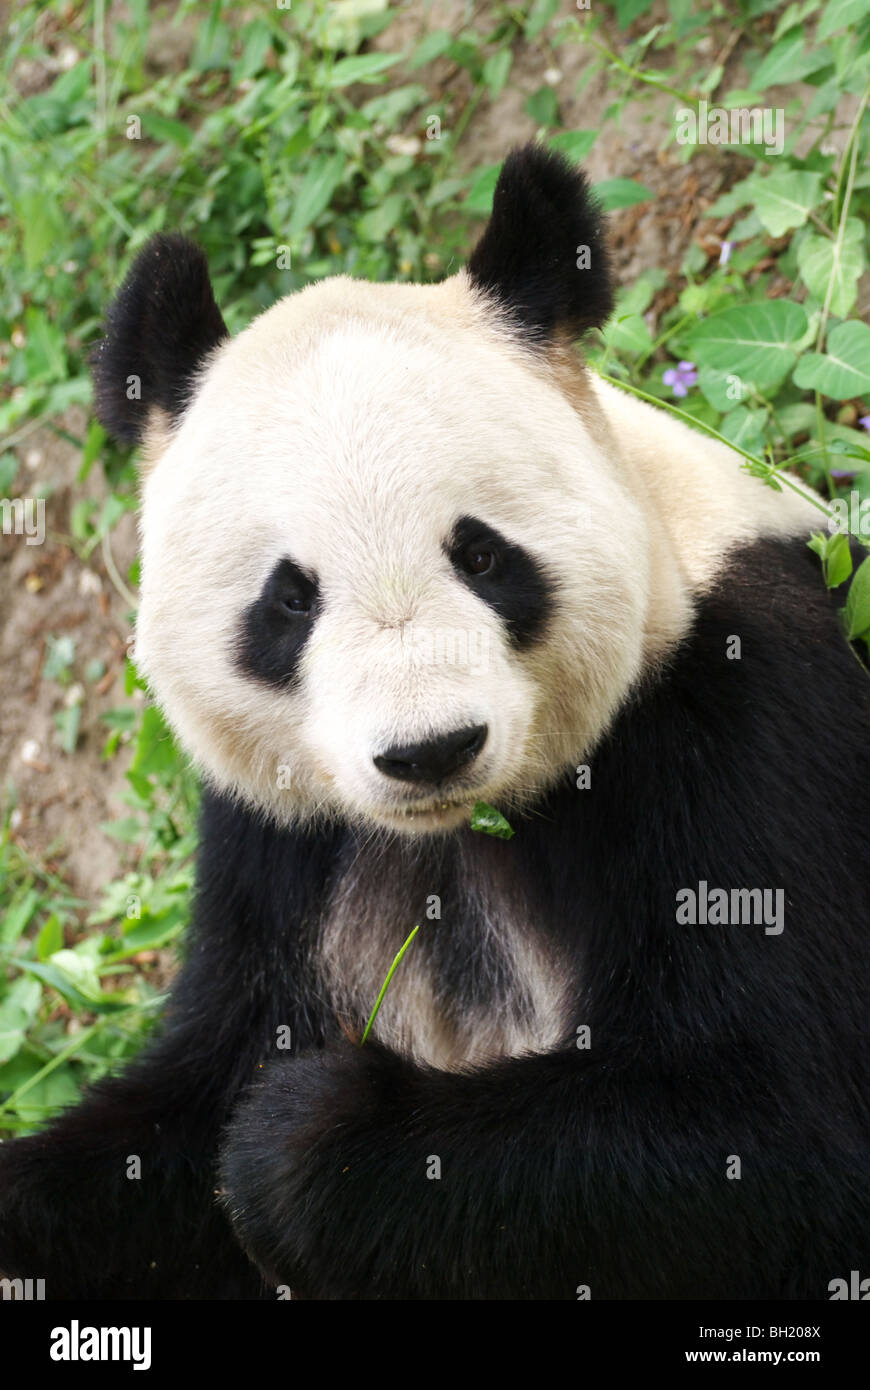 Giant panda portrait Stock Photo